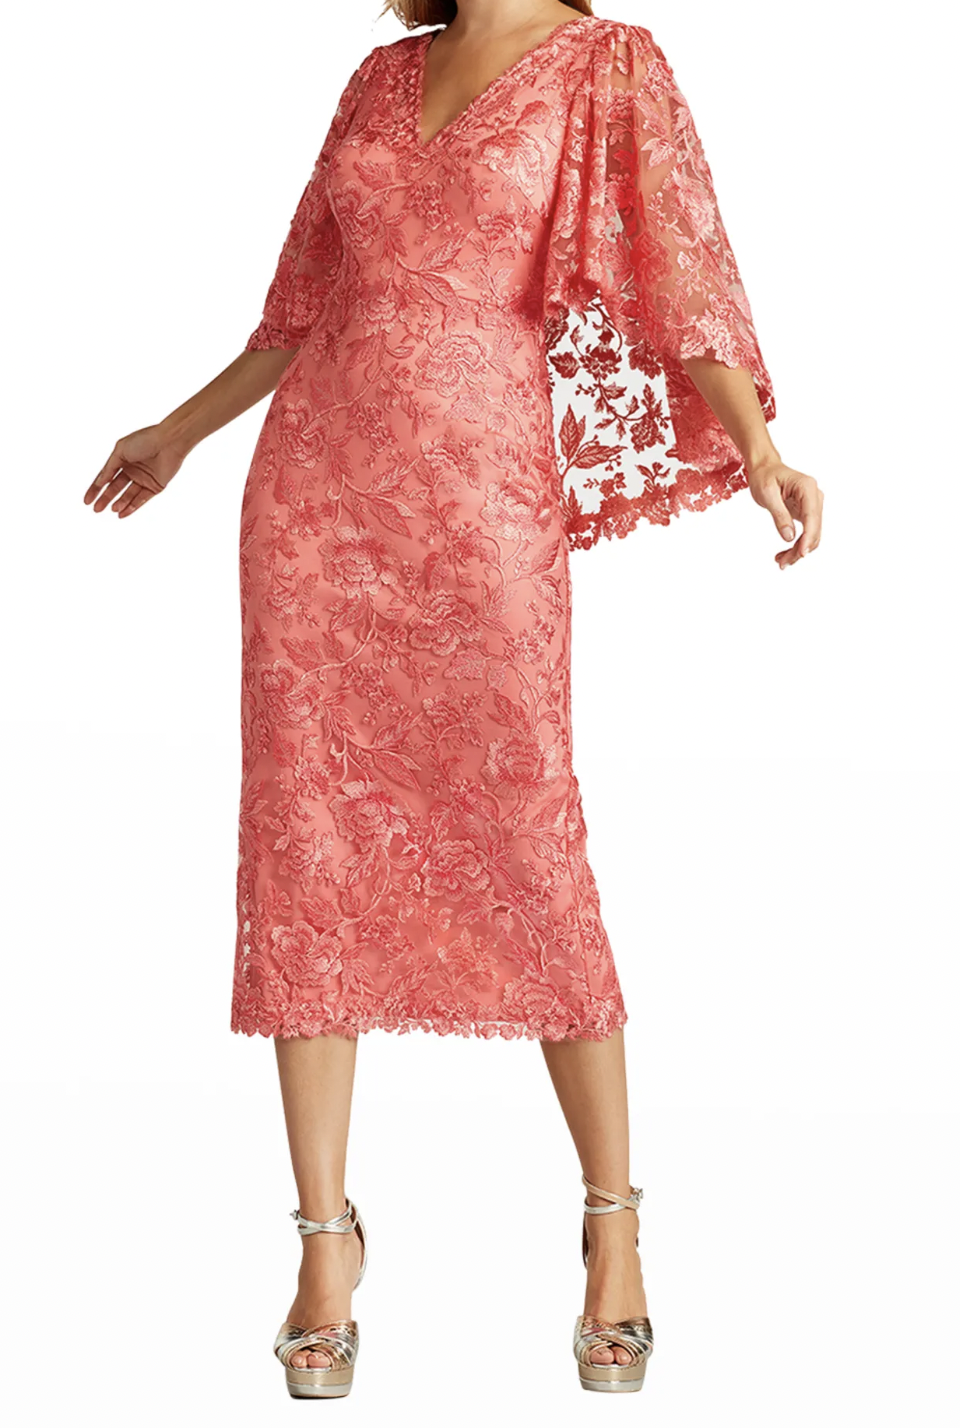 TADASHI SHOJI Floral Lace Sheath Cape Dress